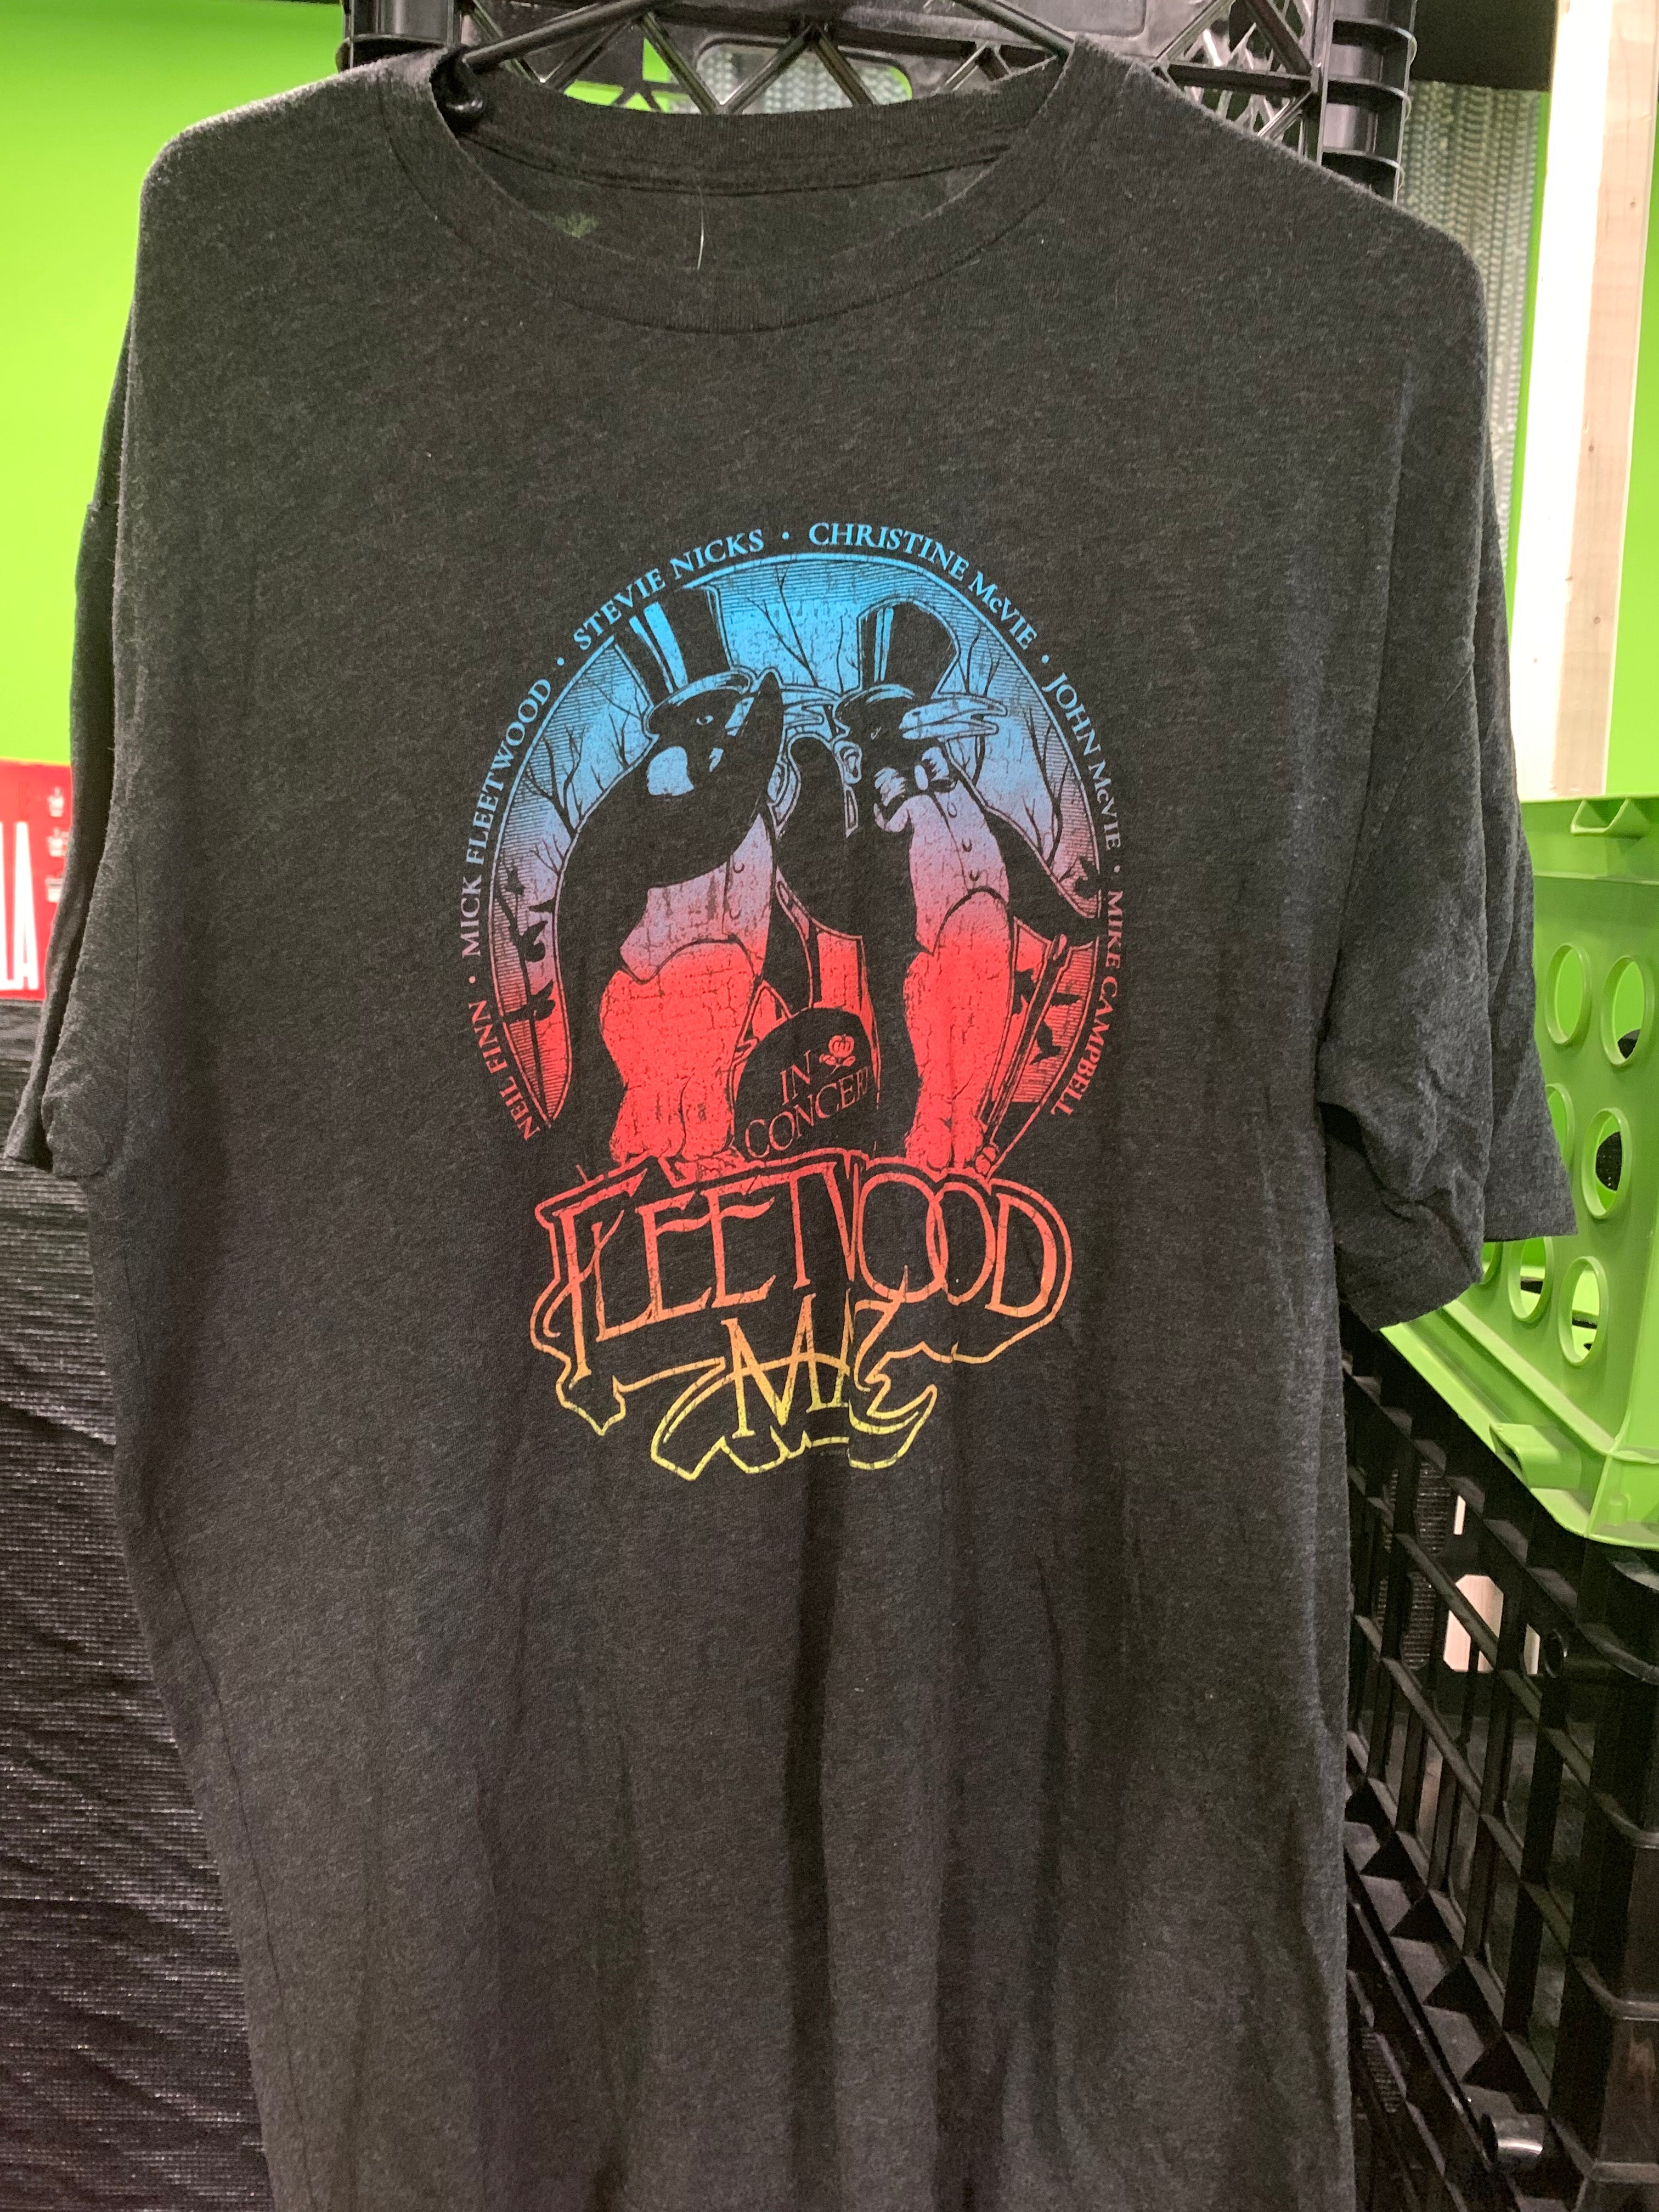 Fleetwood Mac In Concert T-Shirt, Dark Grey, XL